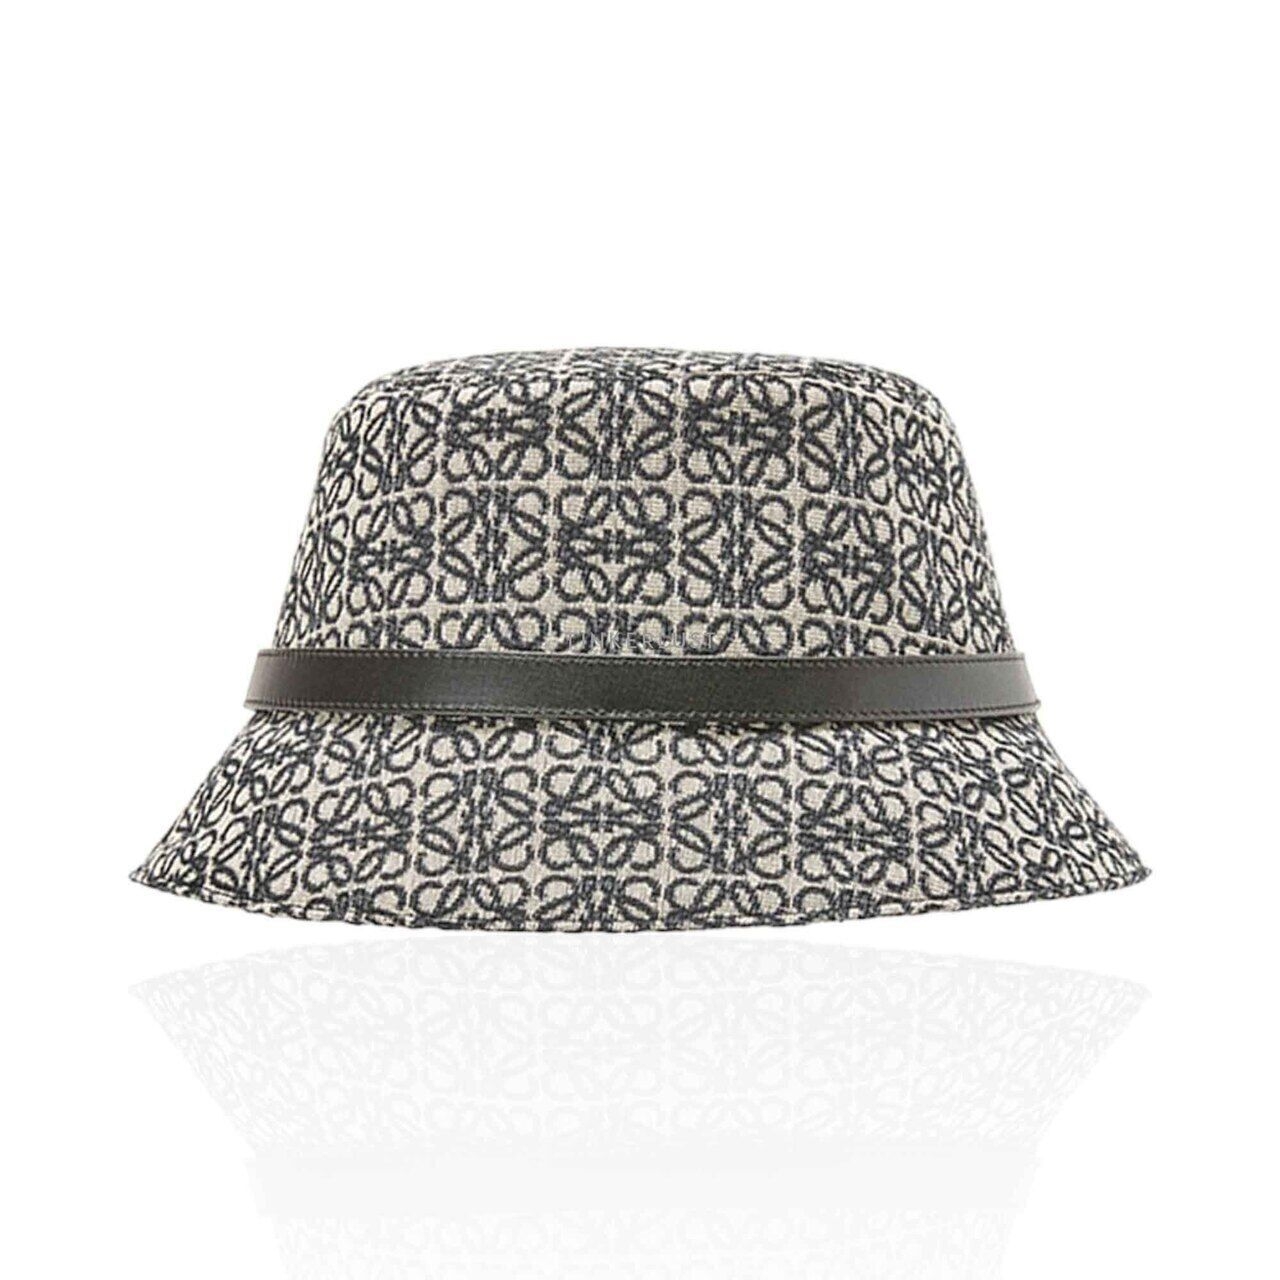 Loewe All Over Anagram Bucket Hat in Navy/Black Jacquard